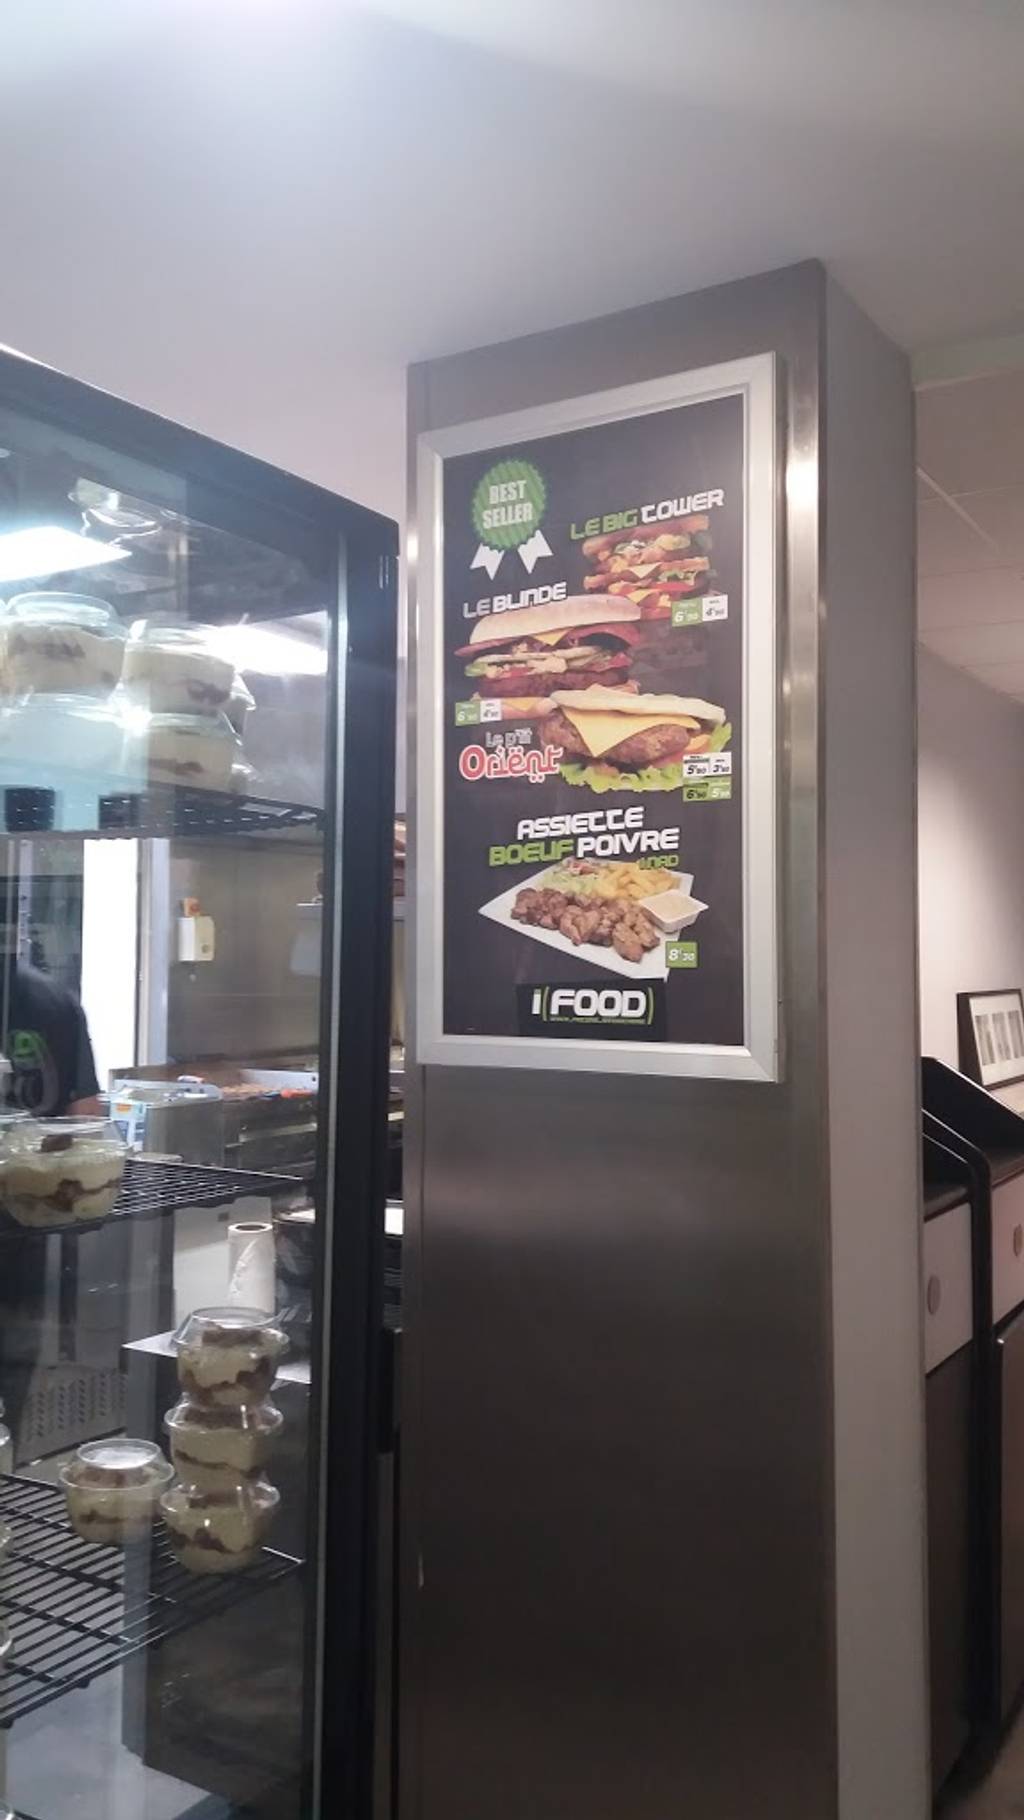 IFood - Douai Burger Douai - Display case Fast food Refrigerator Fast food restaurant Food